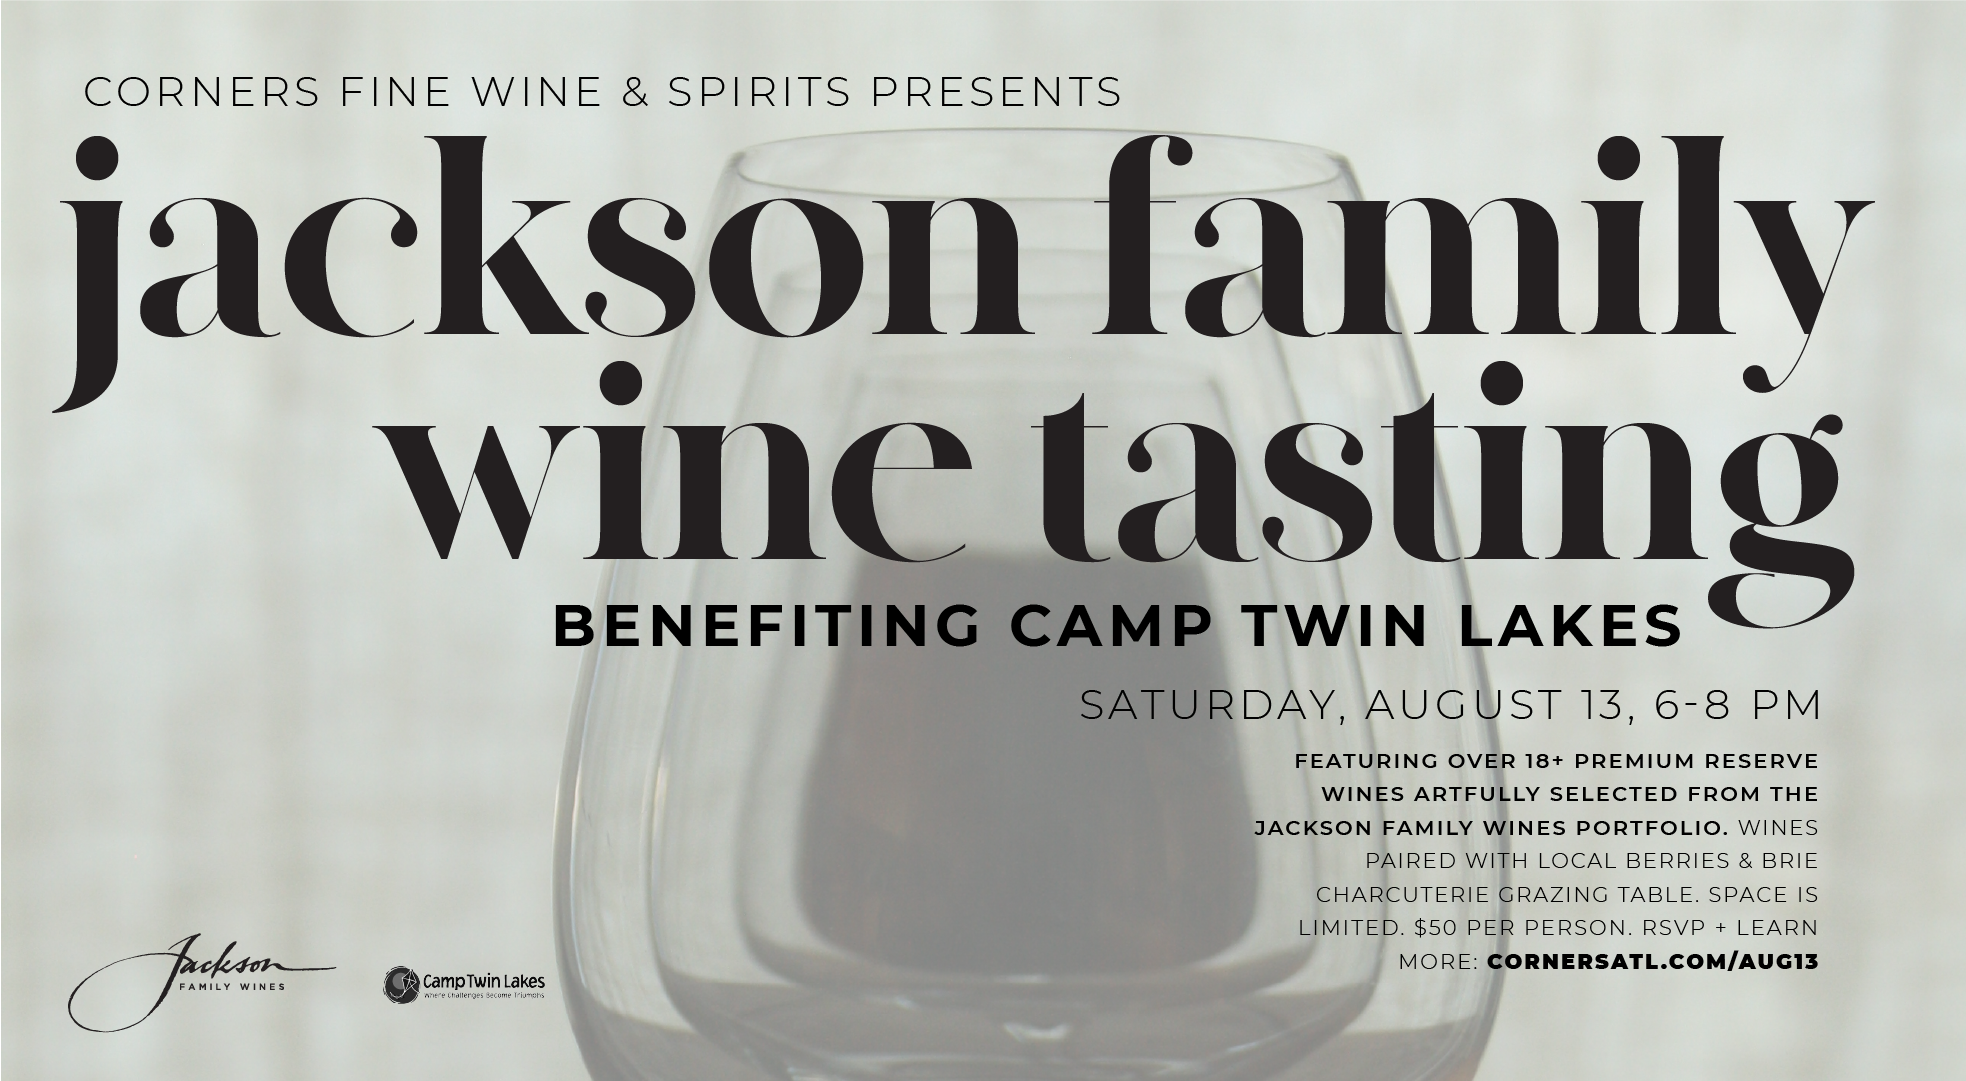 Jackson Family Wine Tasting at Corners Fine Wine & Spirits Benefiting Camp Twin Lakes